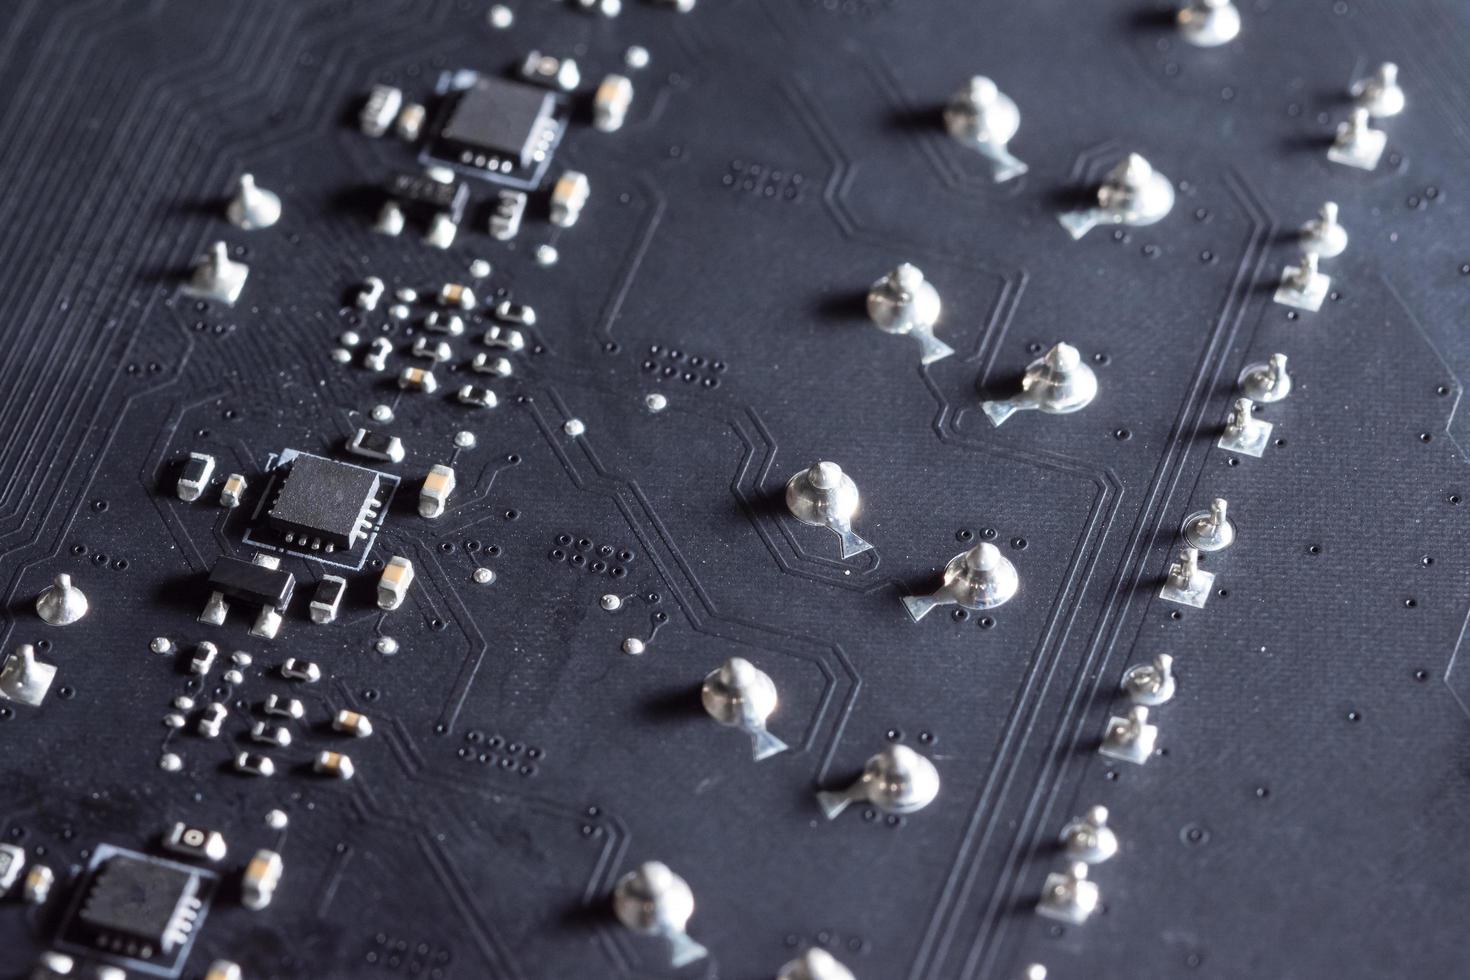 Electronic circuit board, close-up photo